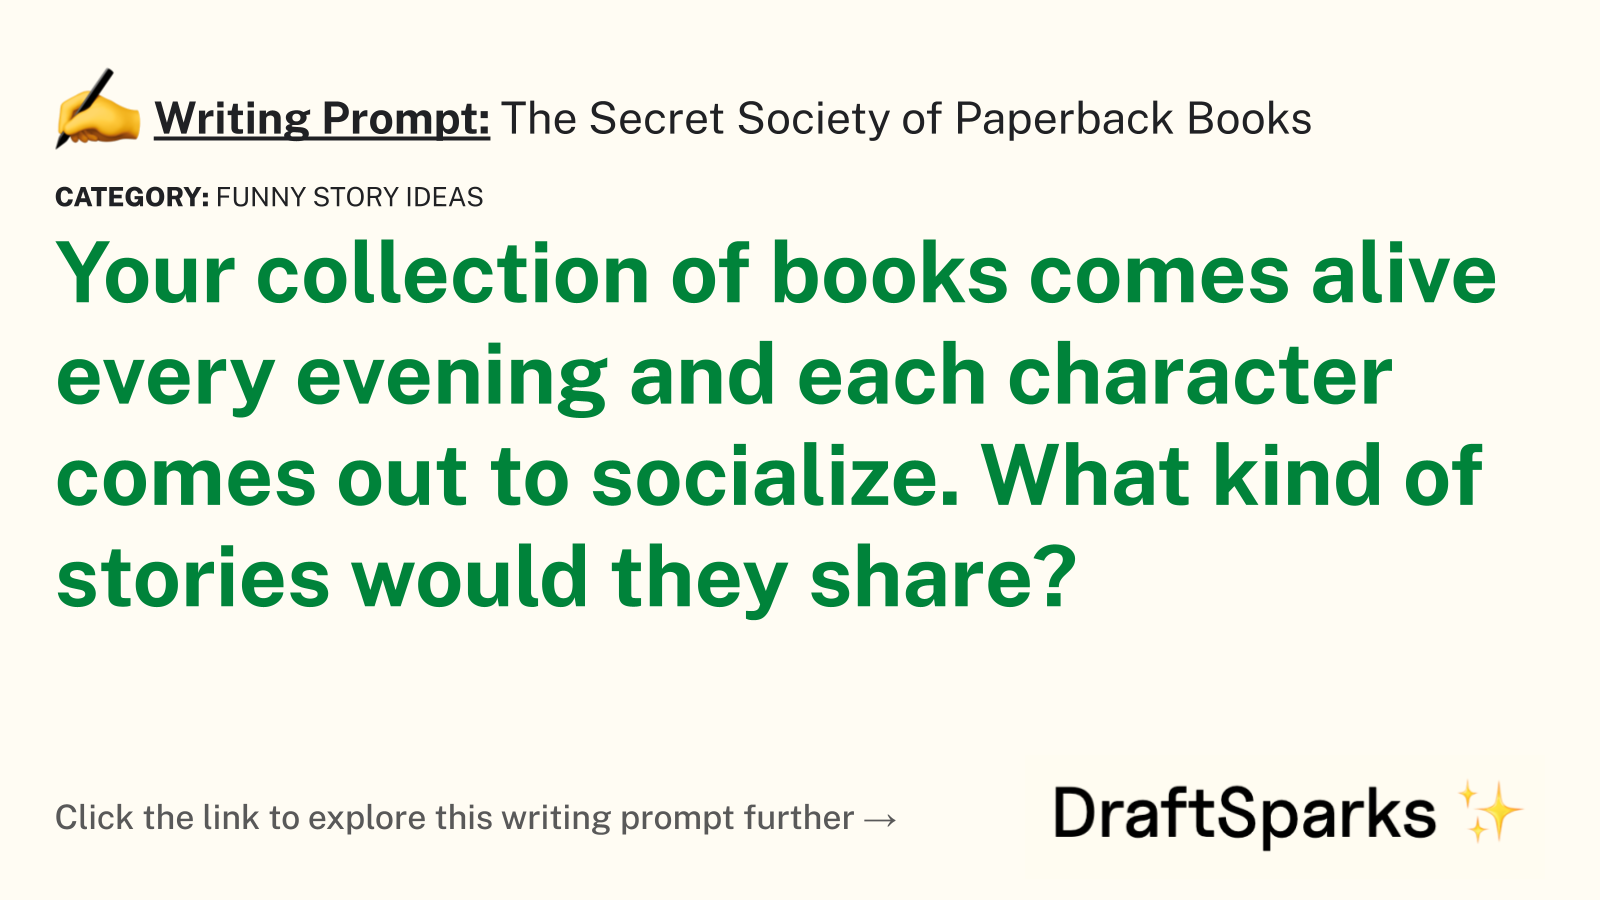 The Secret Society of Paperback Books